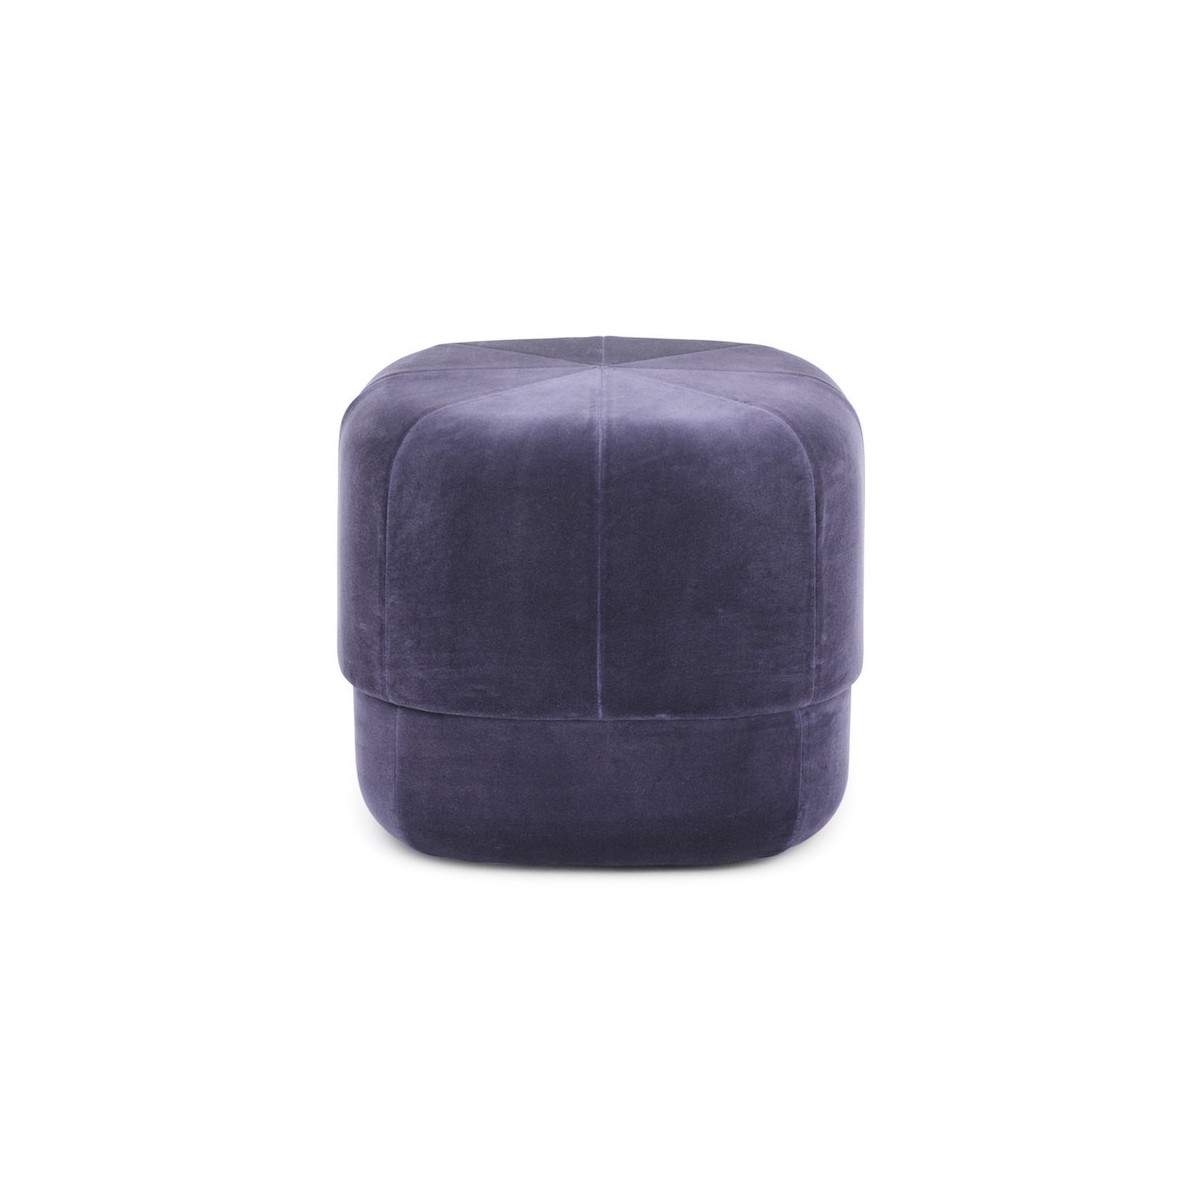 small - purple - Circus pouf - 601082